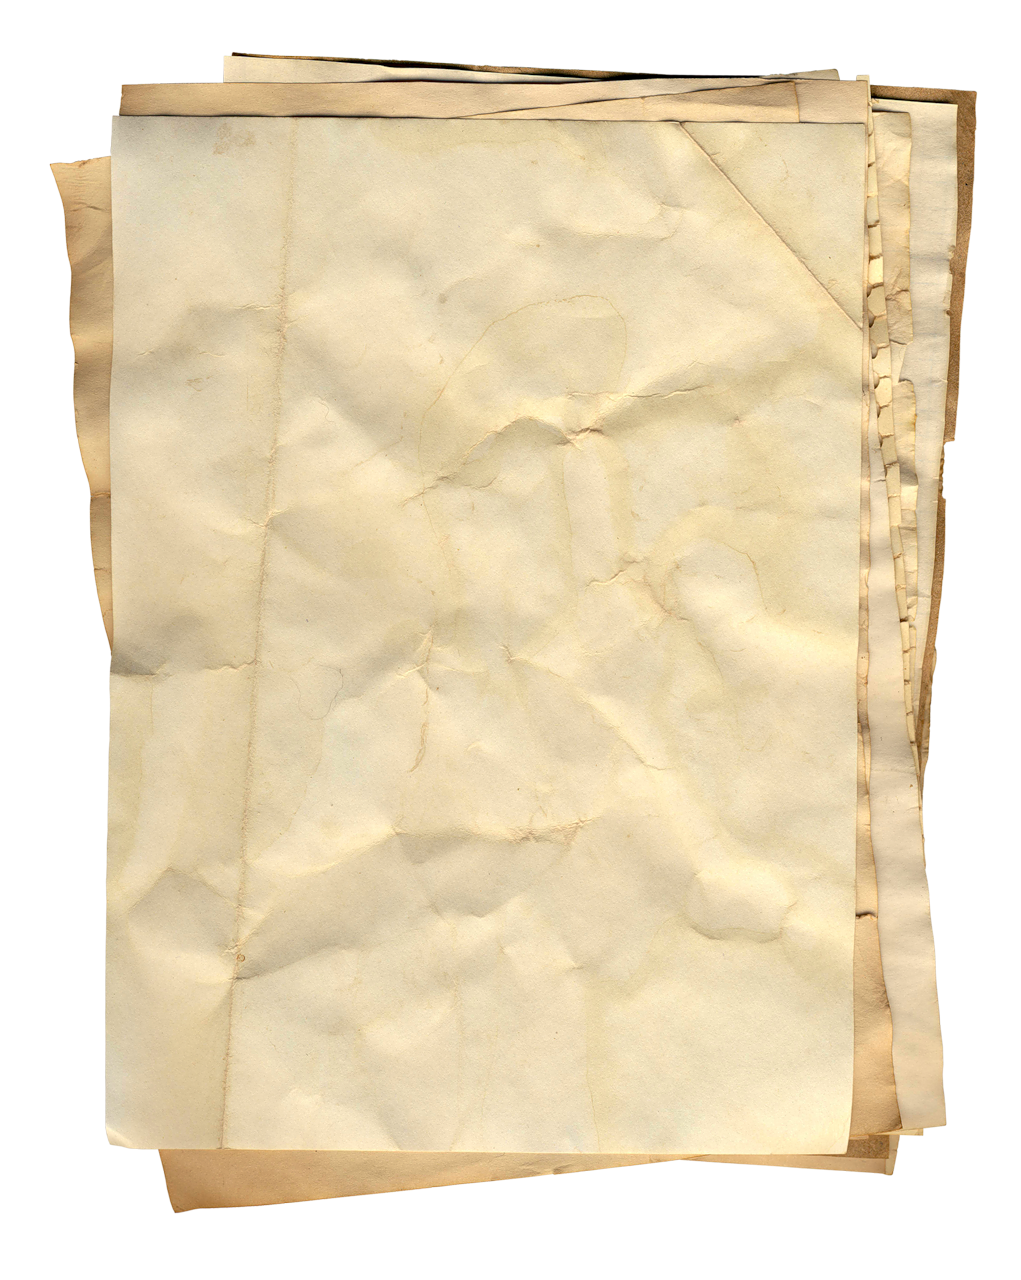 Бумажка пнг. Лист бумаги. Бумага без фона. Старинная бумага. Бумажка без фона.